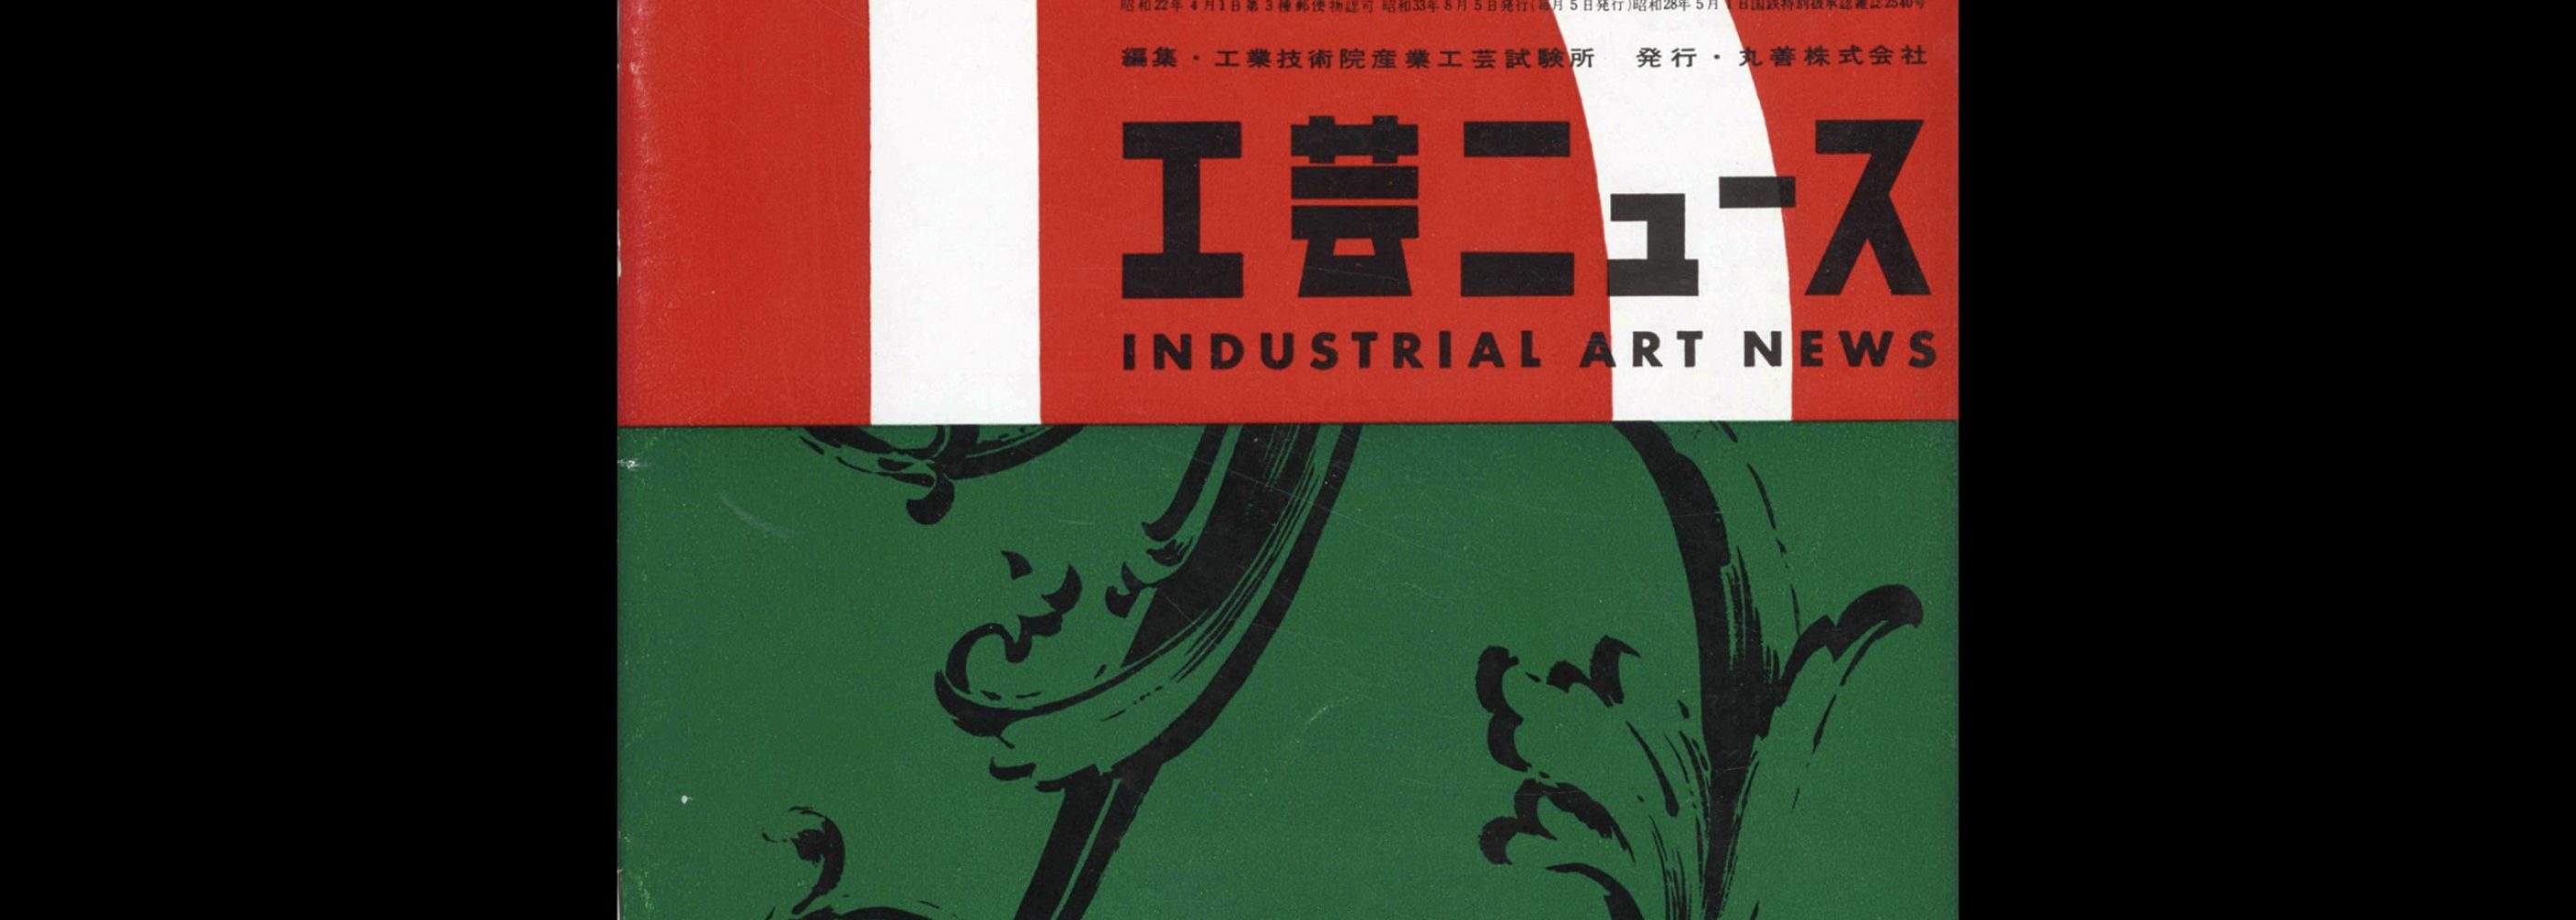 Industrial Art News - Vol. 26, No. 7, August 1958. Cover design by Zen-ichi Mano